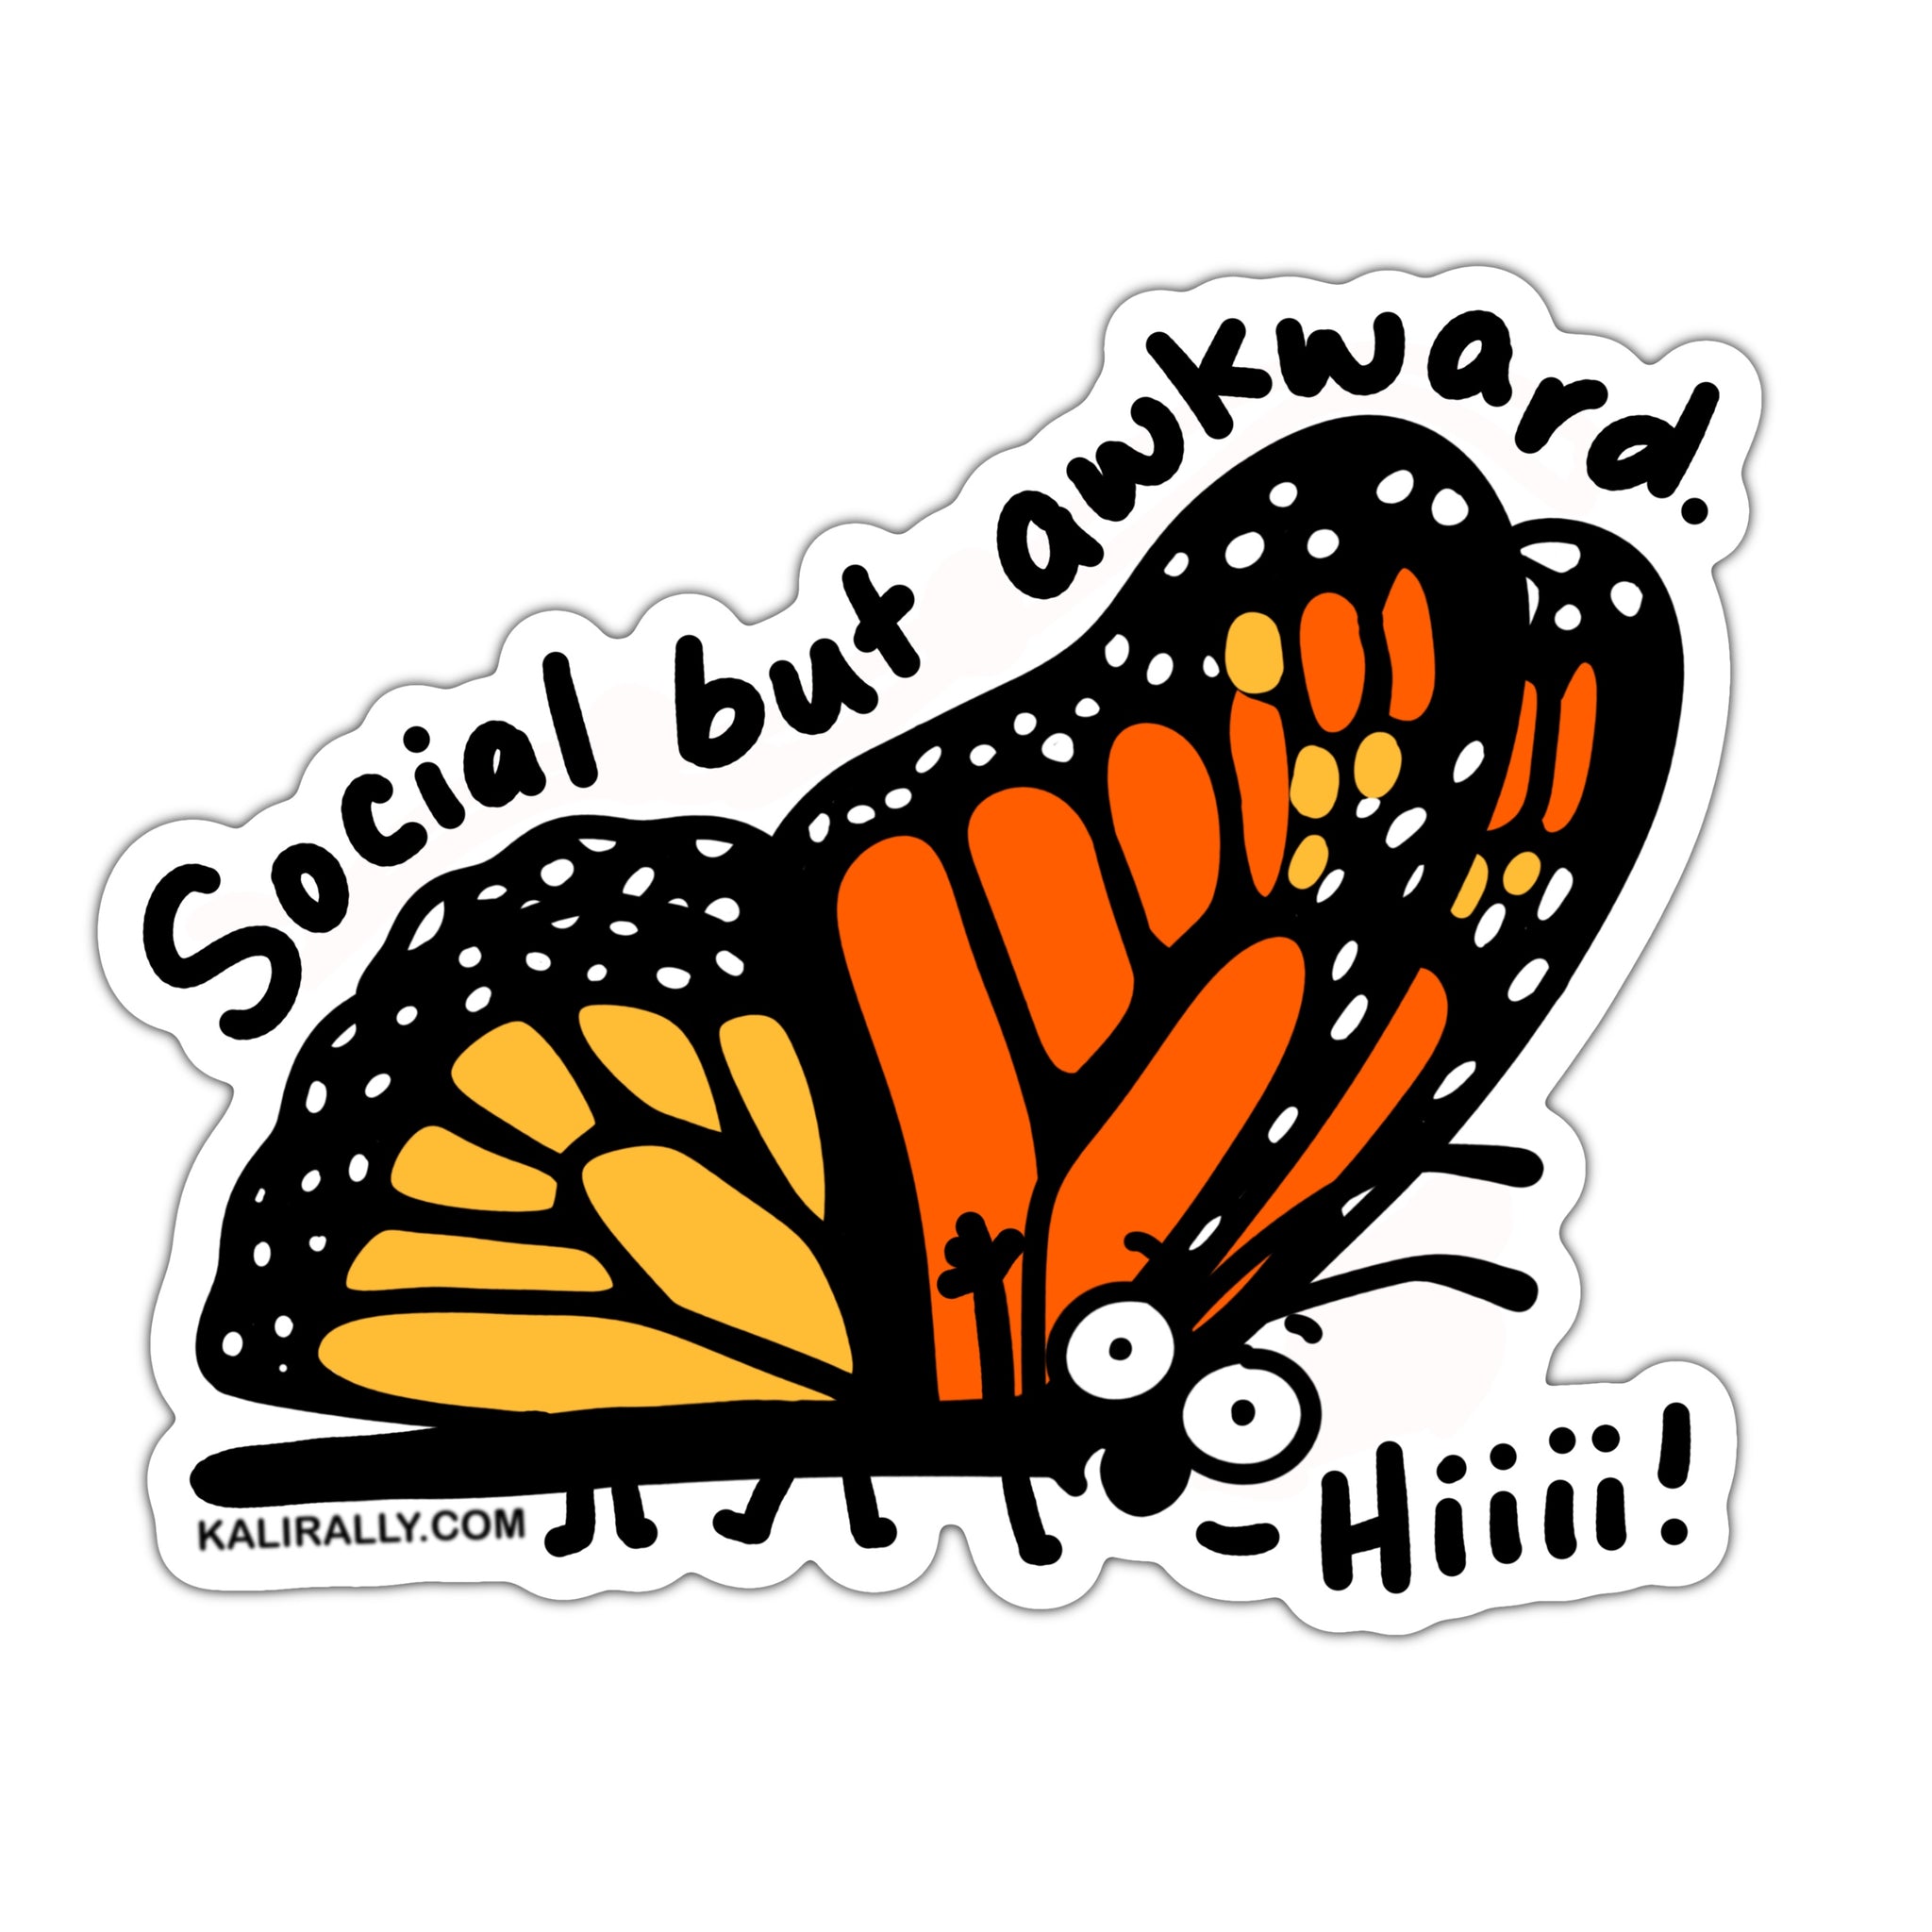 Funny socially awkward sticker, social butterfly sticker for entomologist sticker for lepidopterist gift for entomologist, funny awkward sticker, kalirally